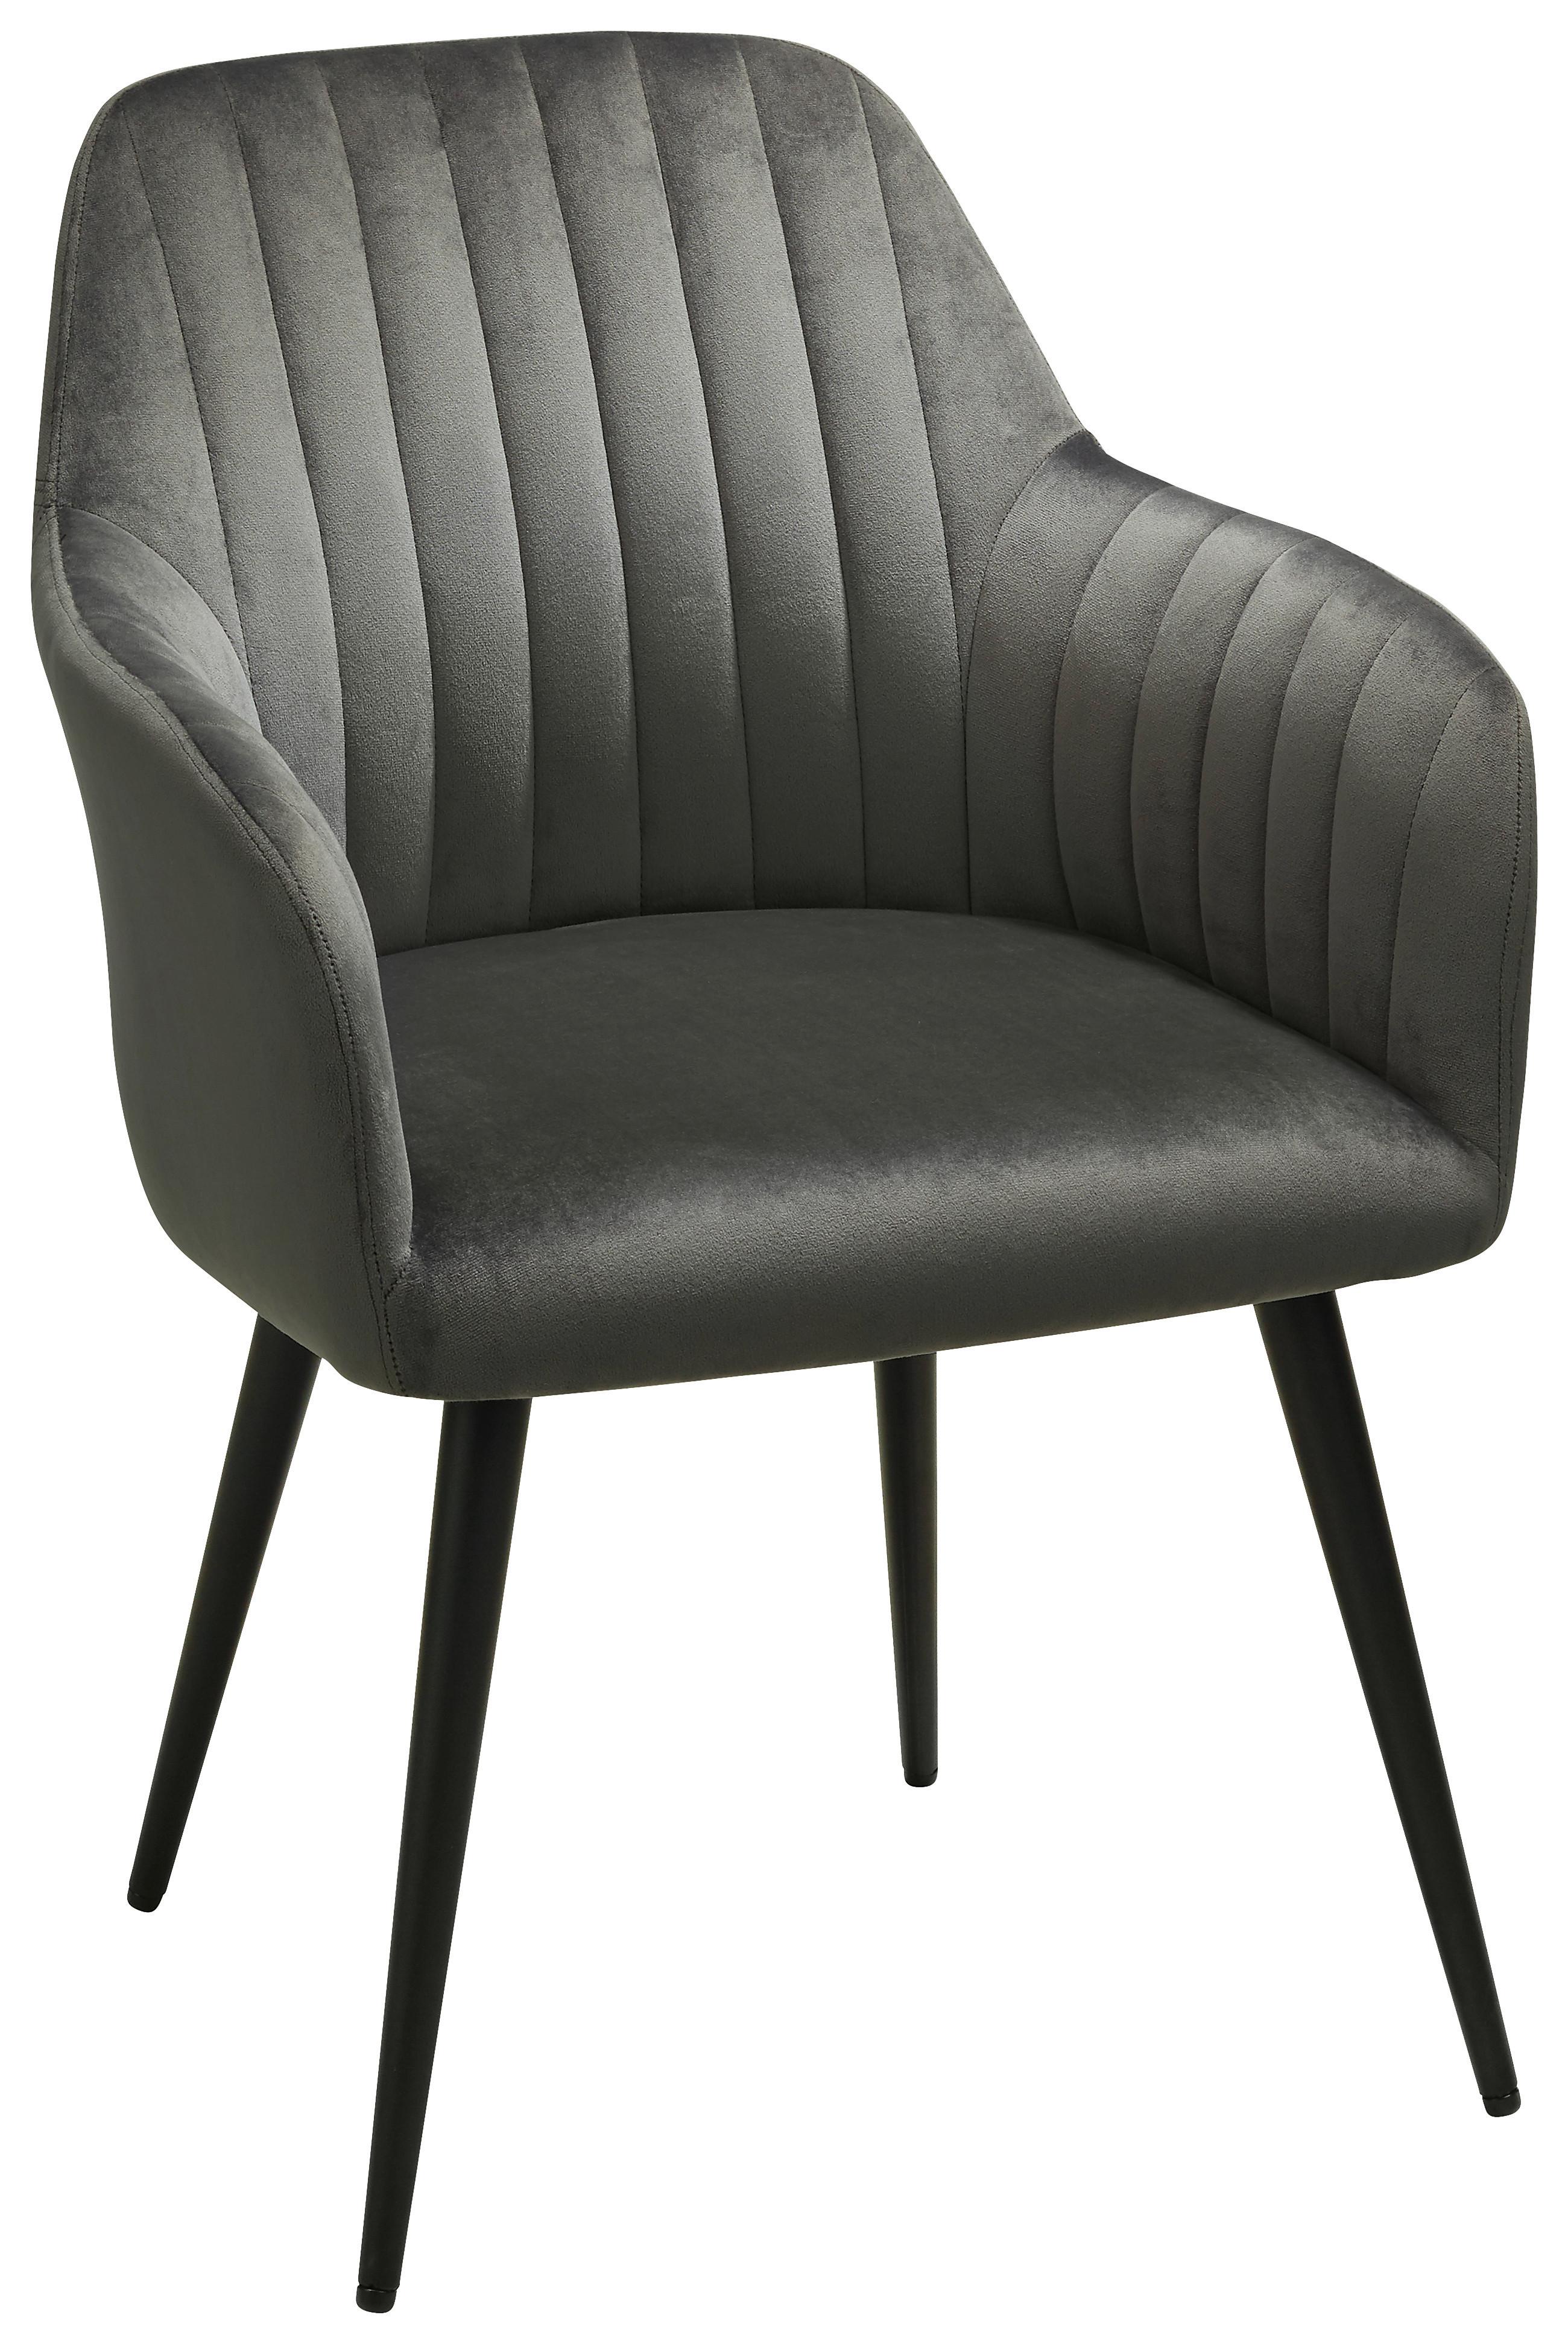 Židle S Područkami Martha -Top- - šedá/černá, Moderní, kov/textil (57/83,5/58cm) - Modern Living